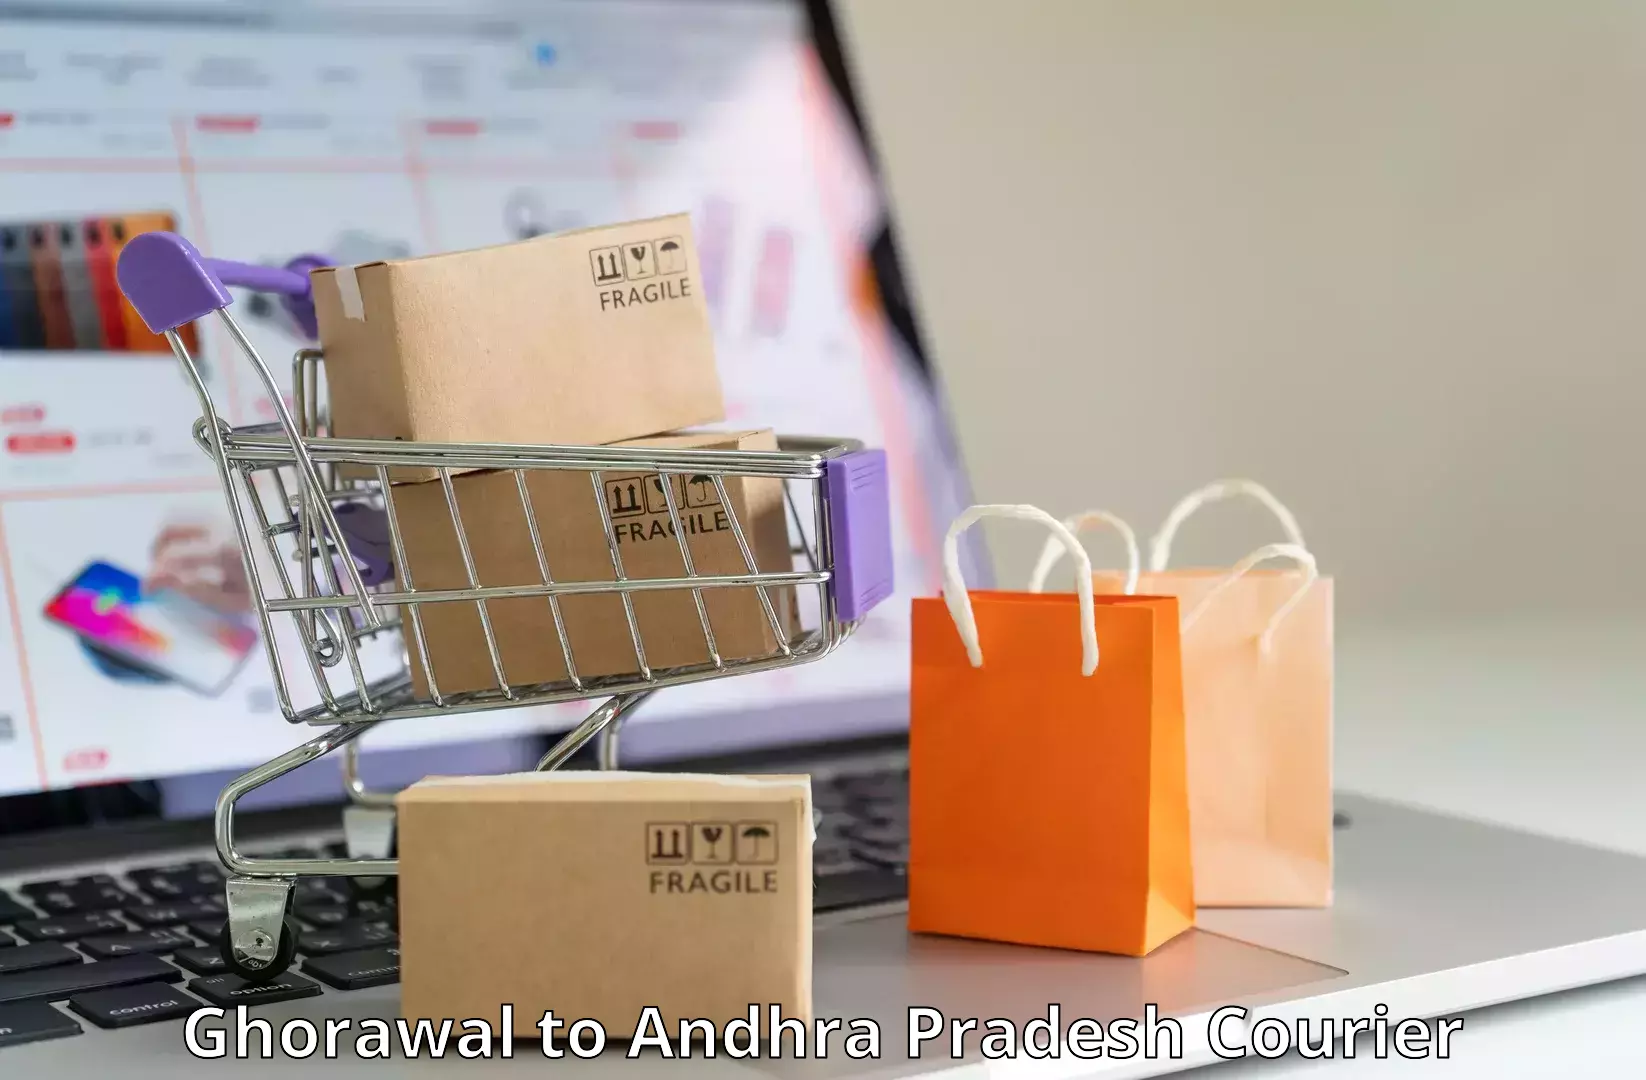 Courier service efficiency Ghorawal to Devarapalli